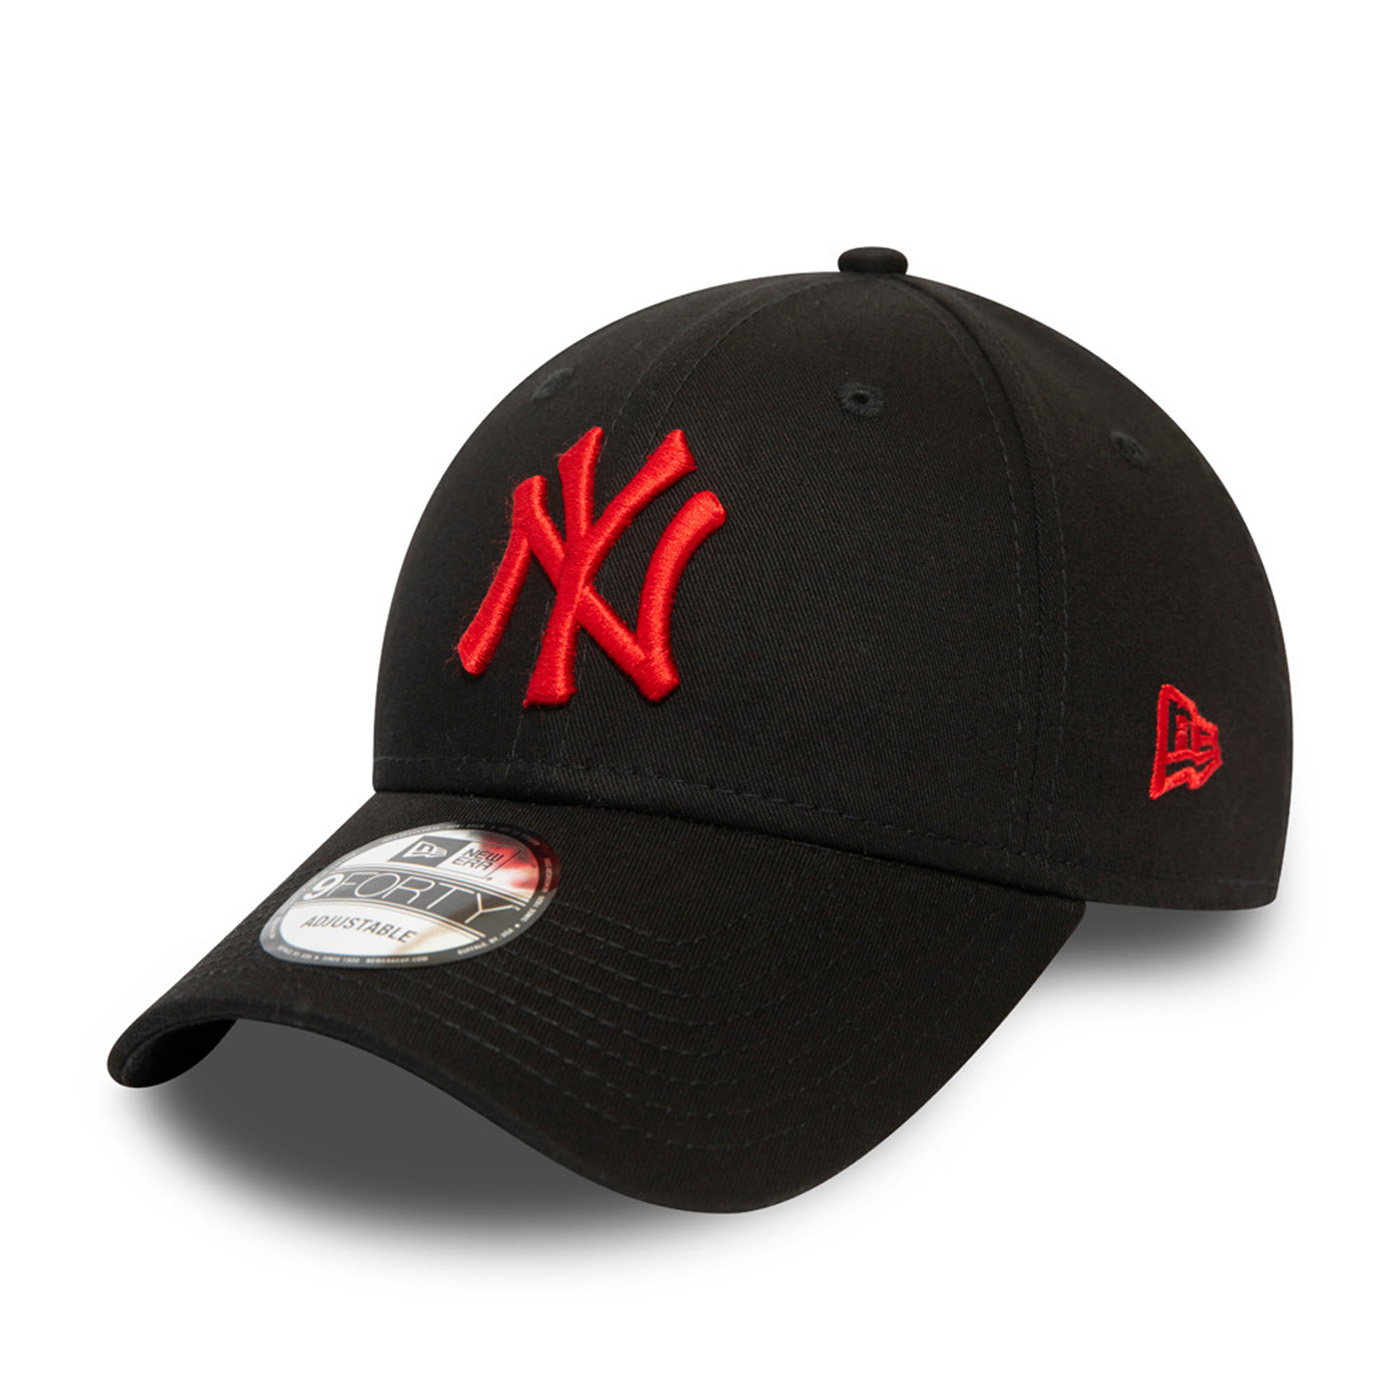 New Era 9FORTY New York Yankees Cap Black / Red